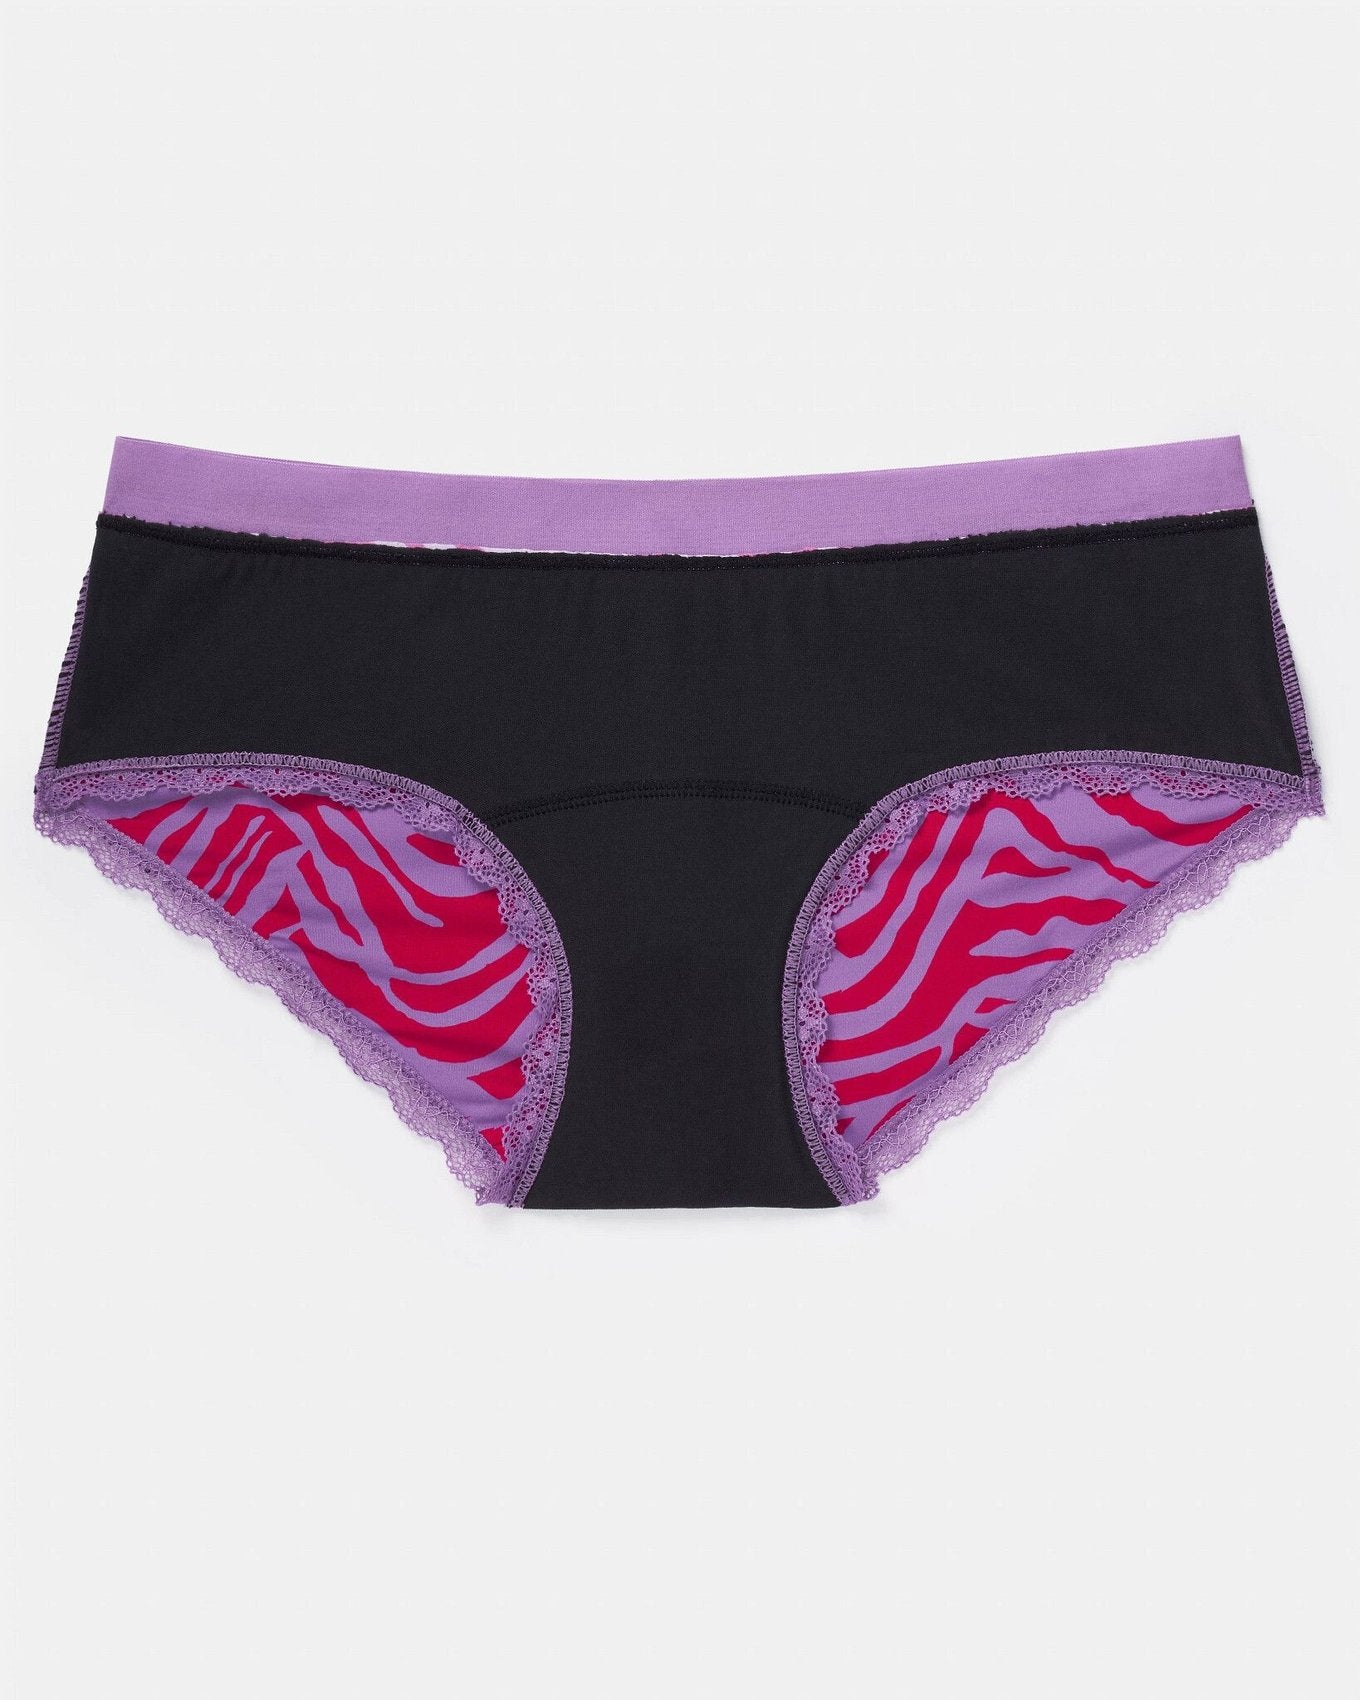 Joyja Olivia period-proof panty in color Secret Safari C02 and shape hipster